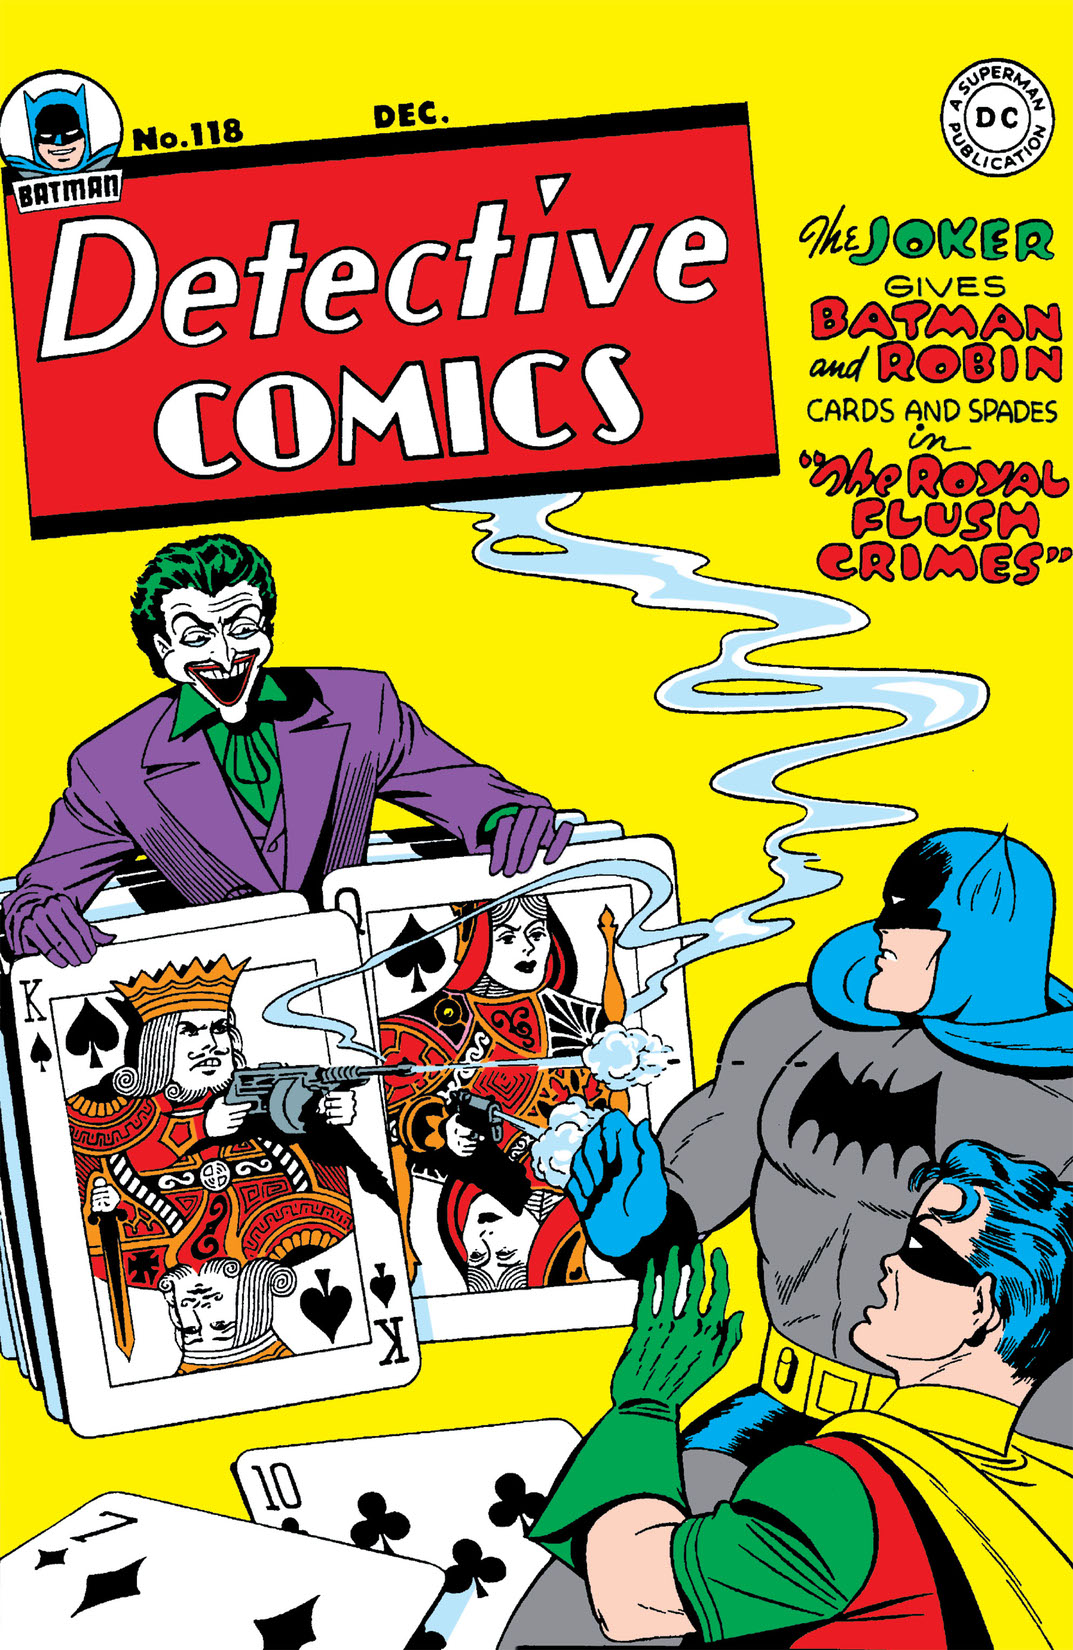 Detective Comics (1937-) #118 preview images